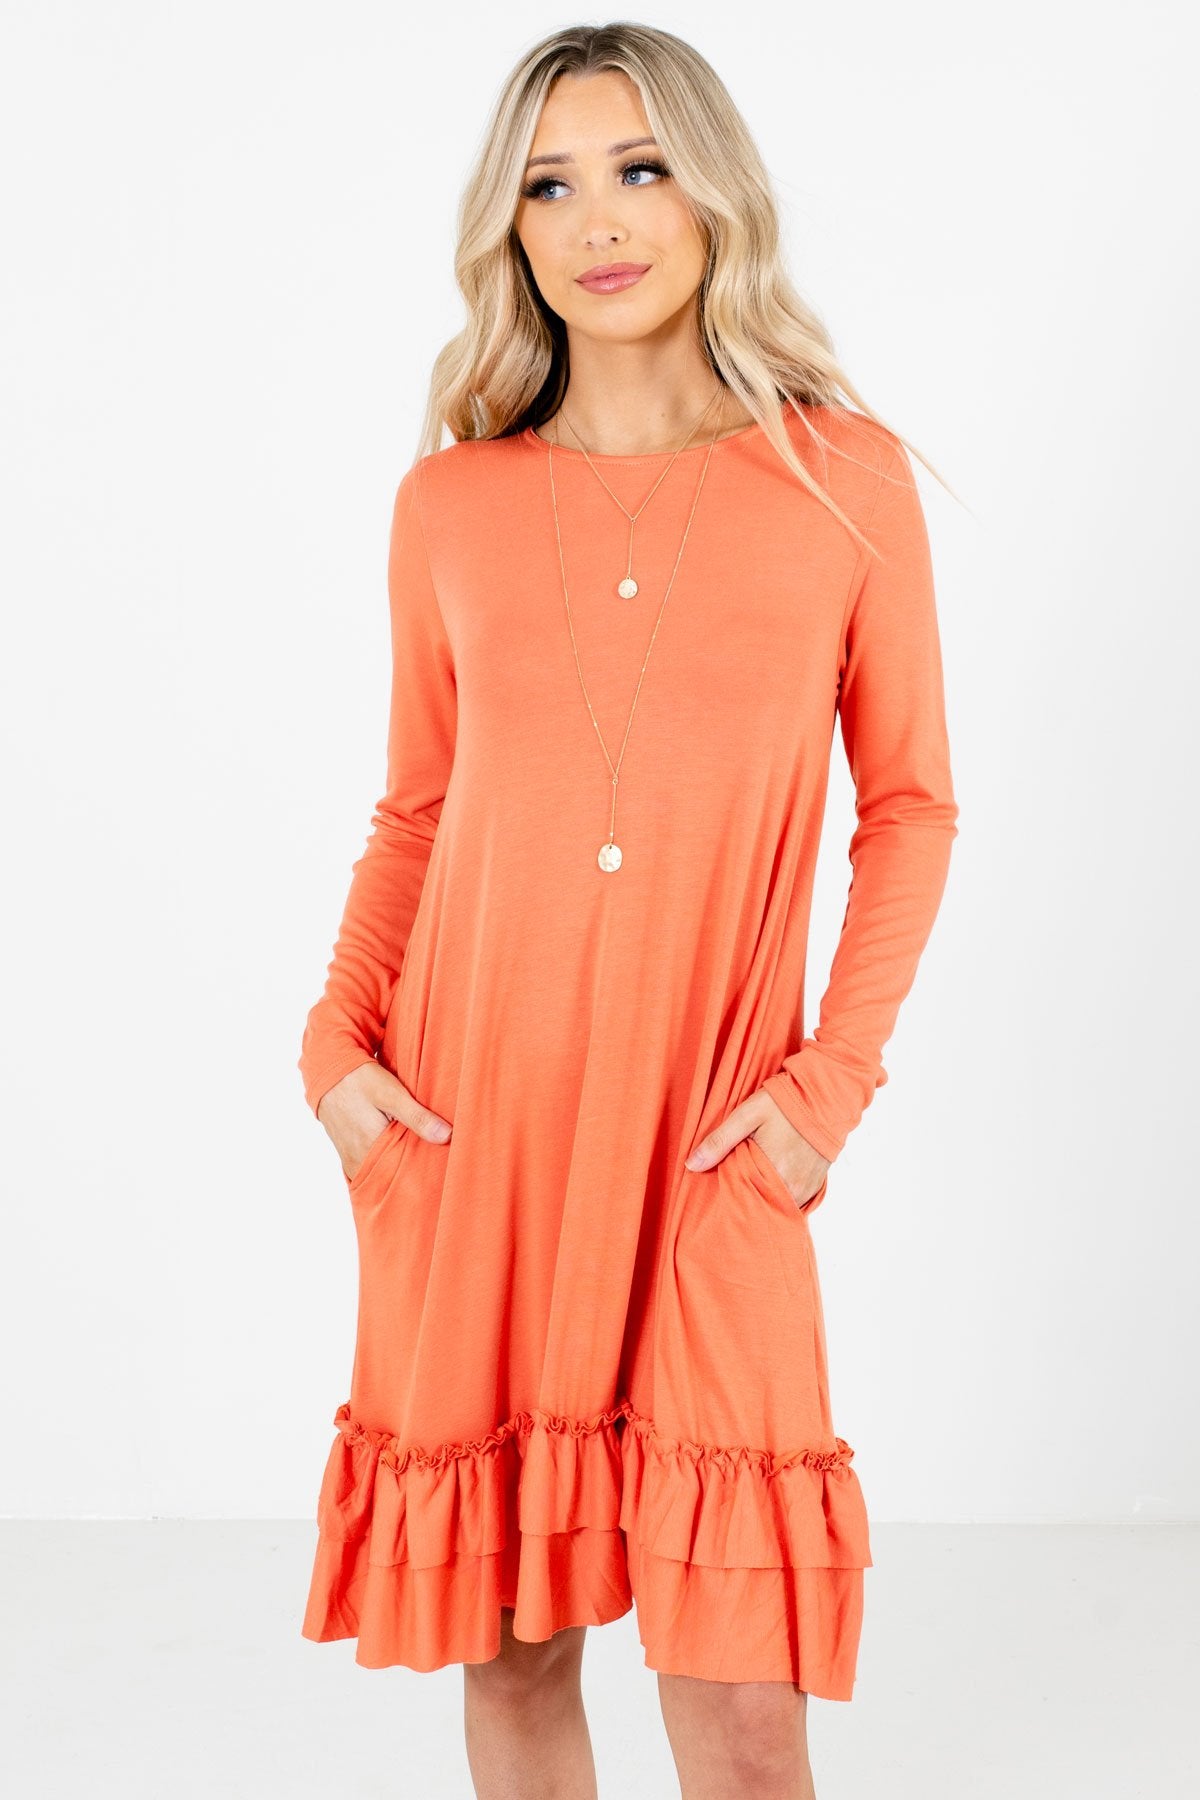 Women's Orange Boutique Knee-Length Dresses with Pockets